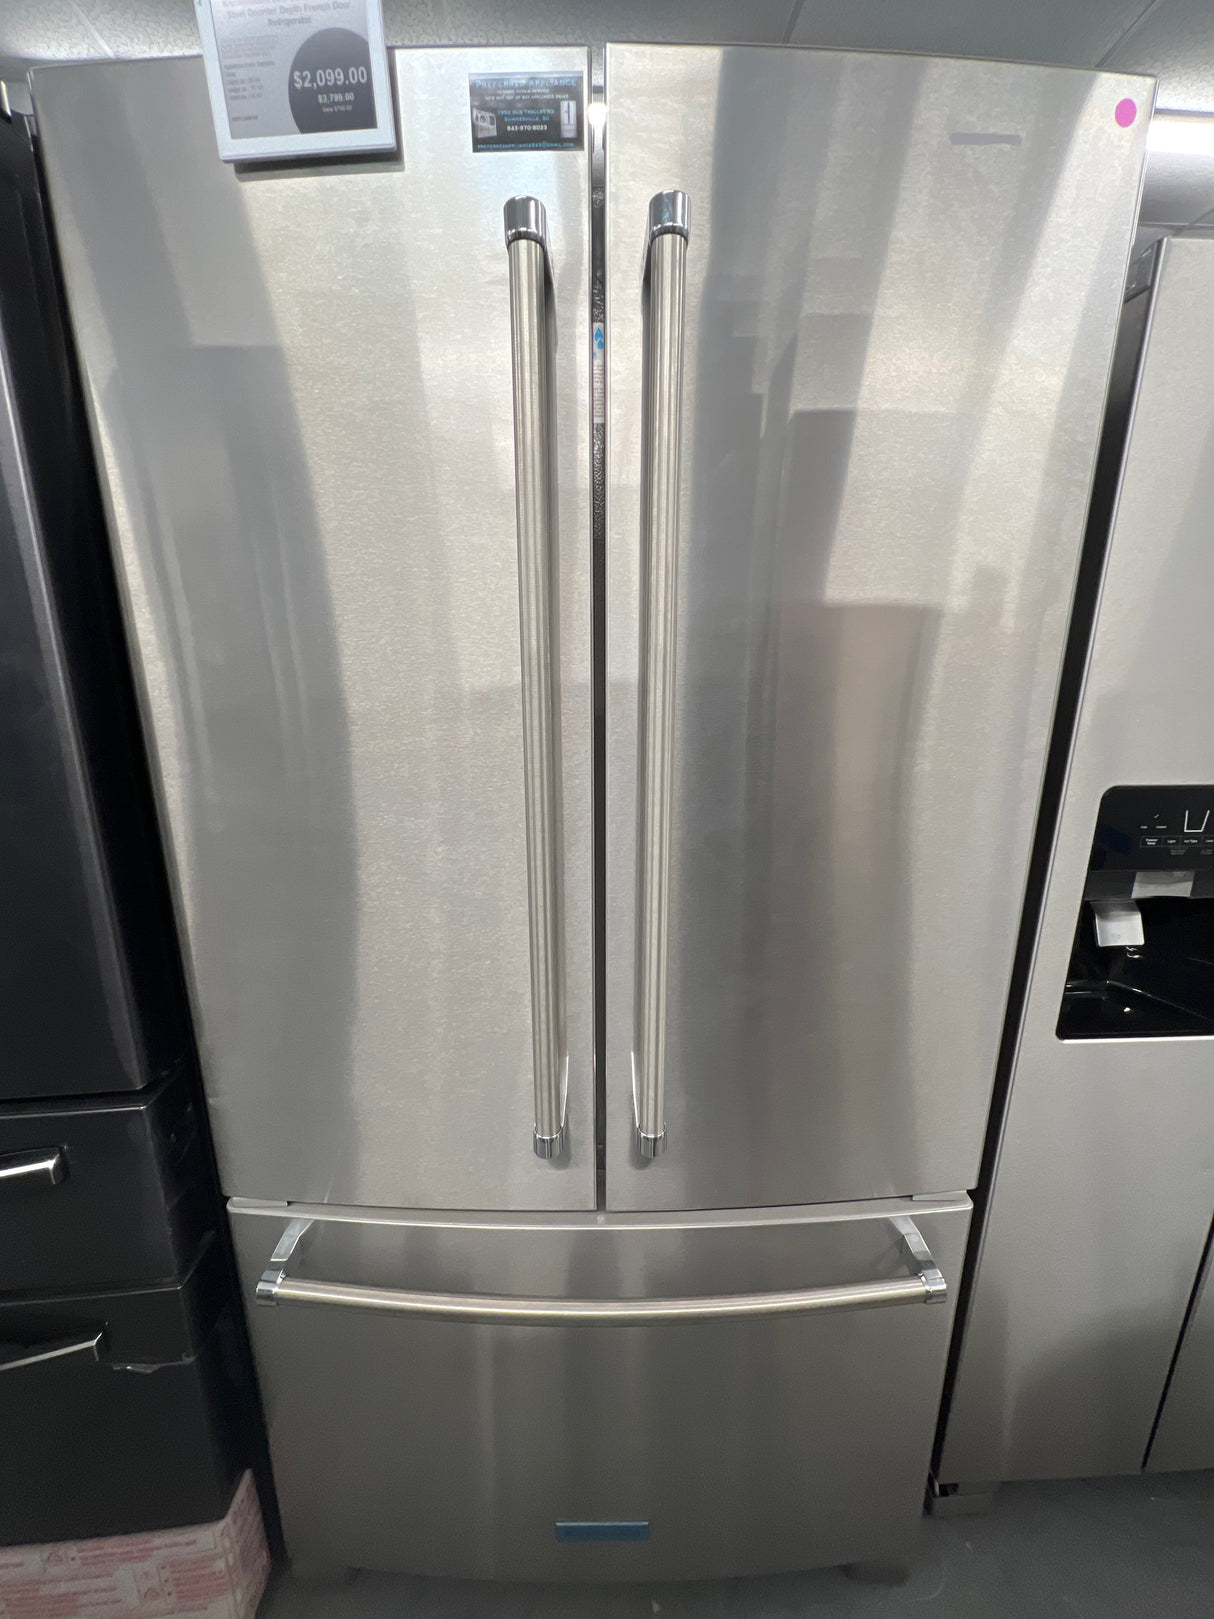 KRFC300ESS kitchenAid 20.0 ft.³ stainless steel counter depth French door refrigerator.